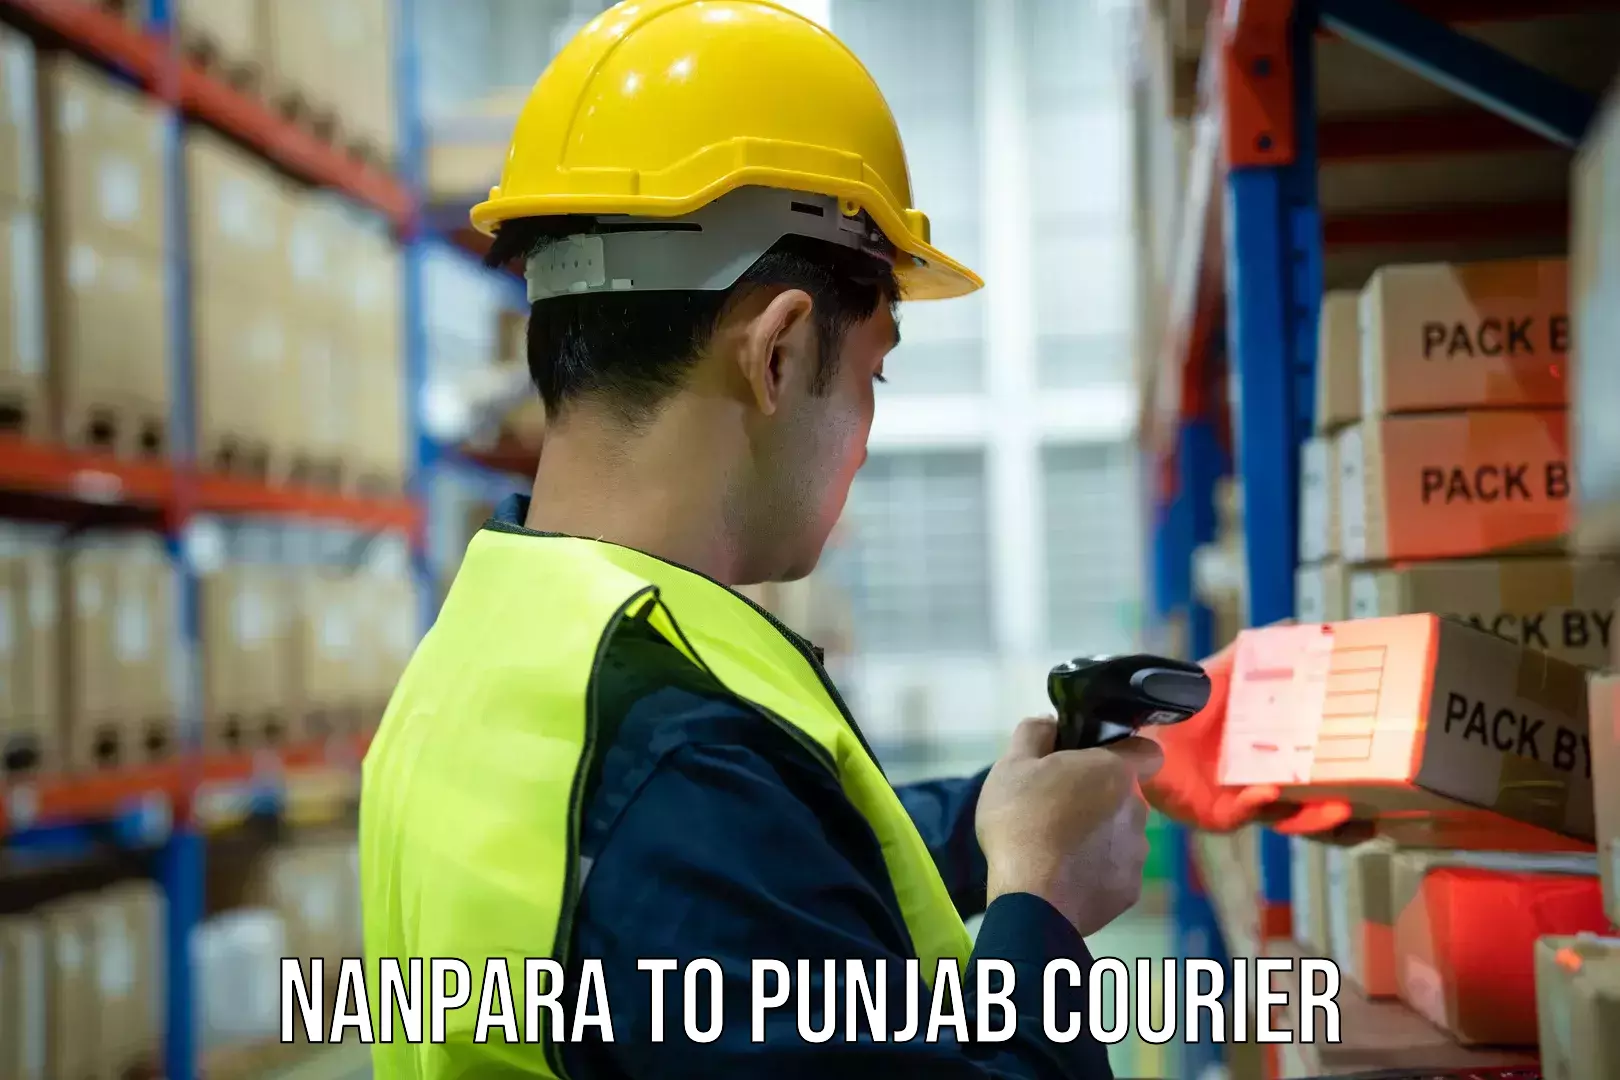 Global shipping networks Nanpara to Goindwal Sahib